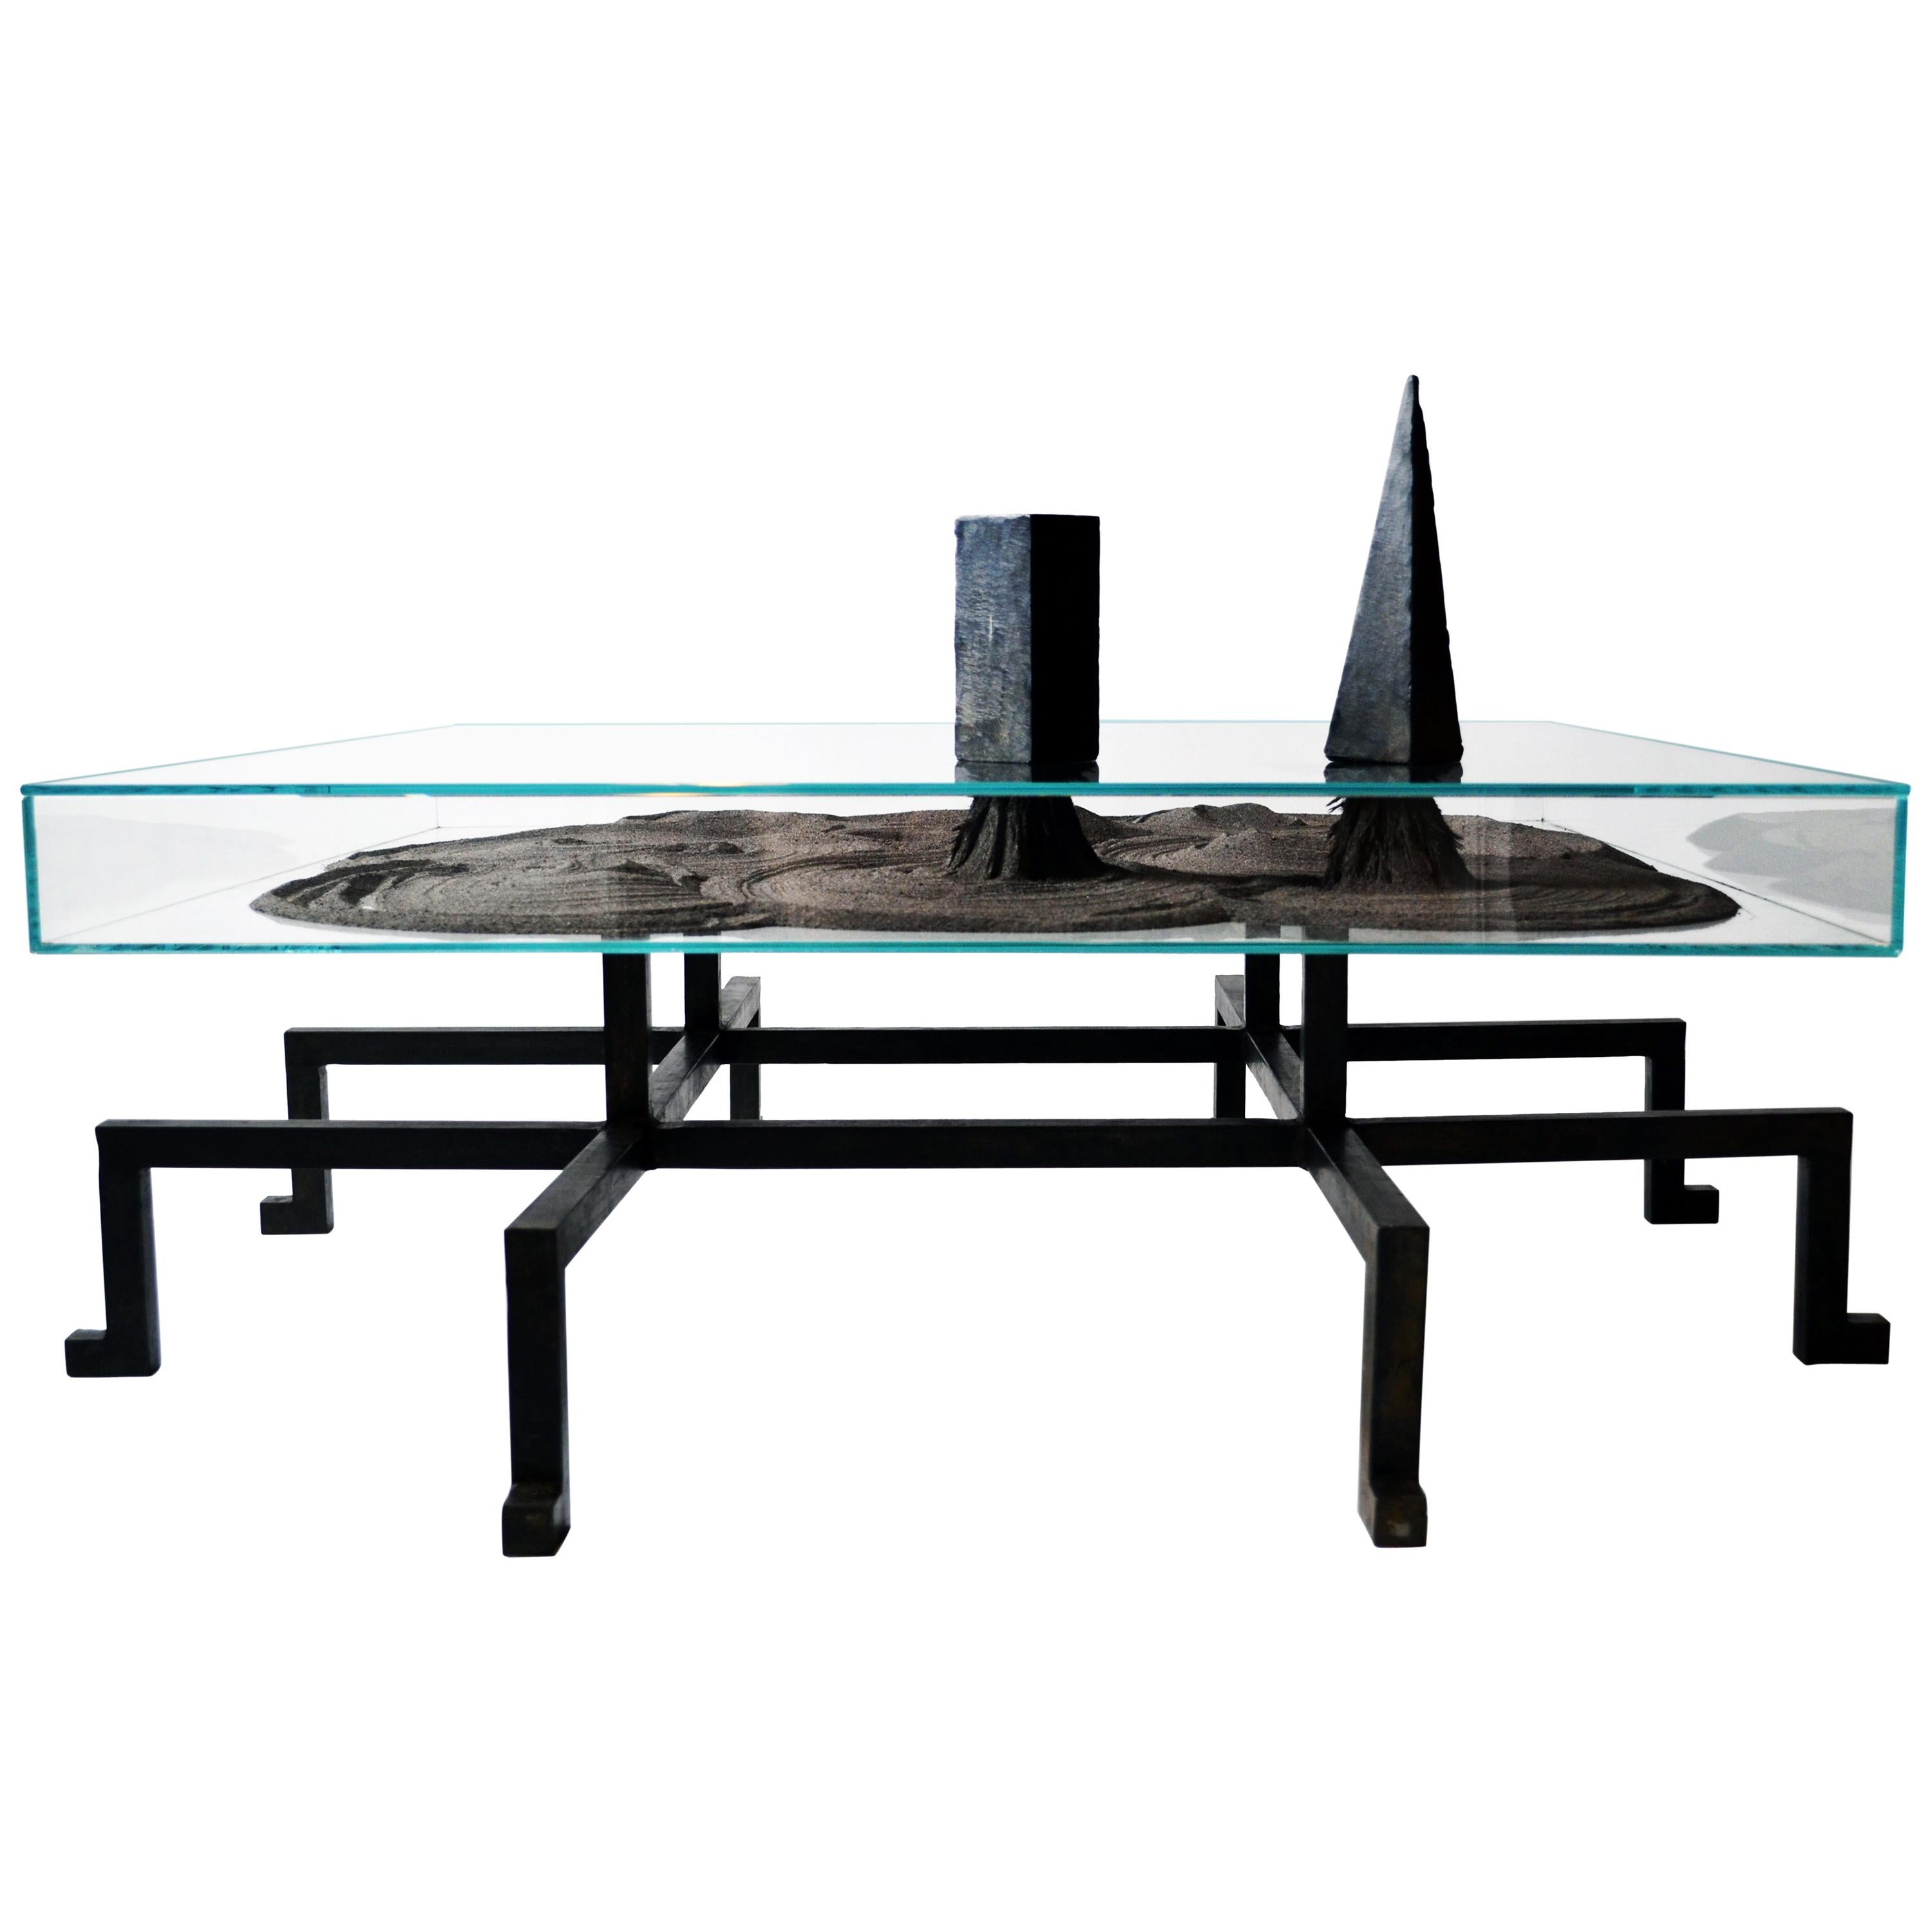 Kinetic Coffee Table Spiderleg Sculptural Dynamic Magnetic Interactive Art Steel